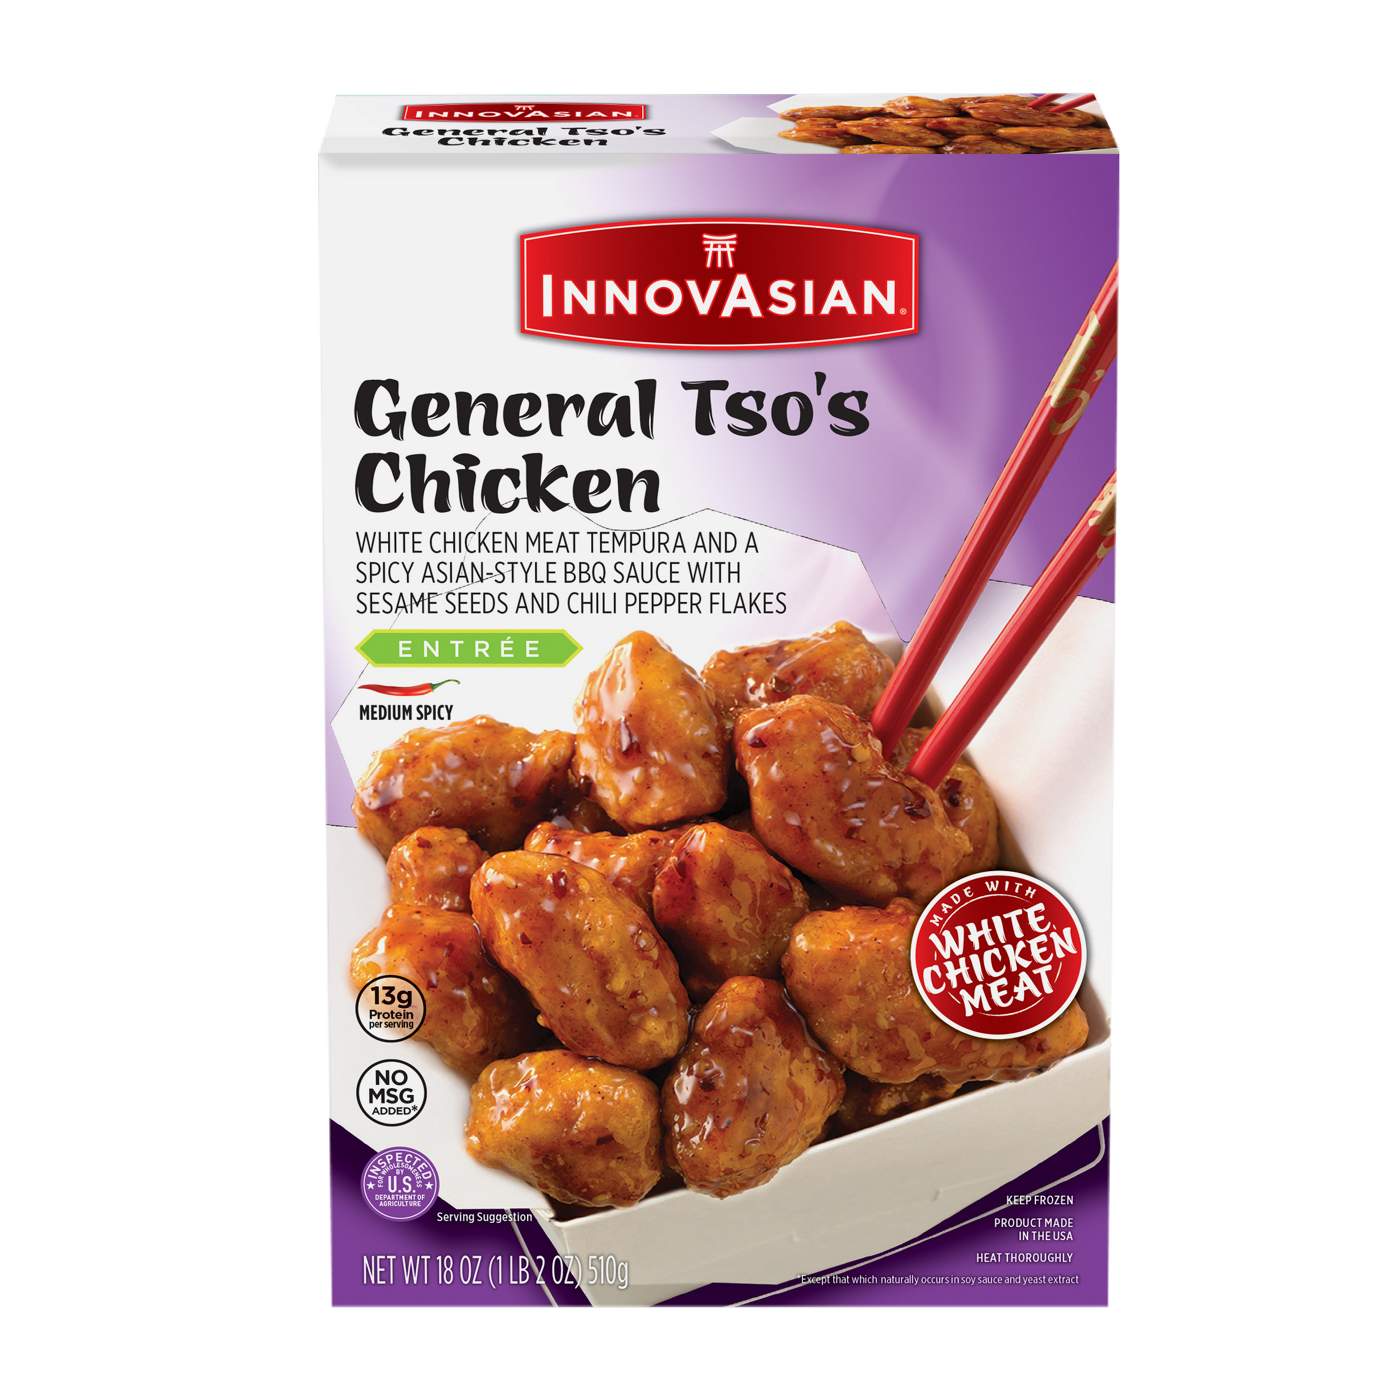 InnovAsian Frozen General Tso's Chicken; image 1 of 5